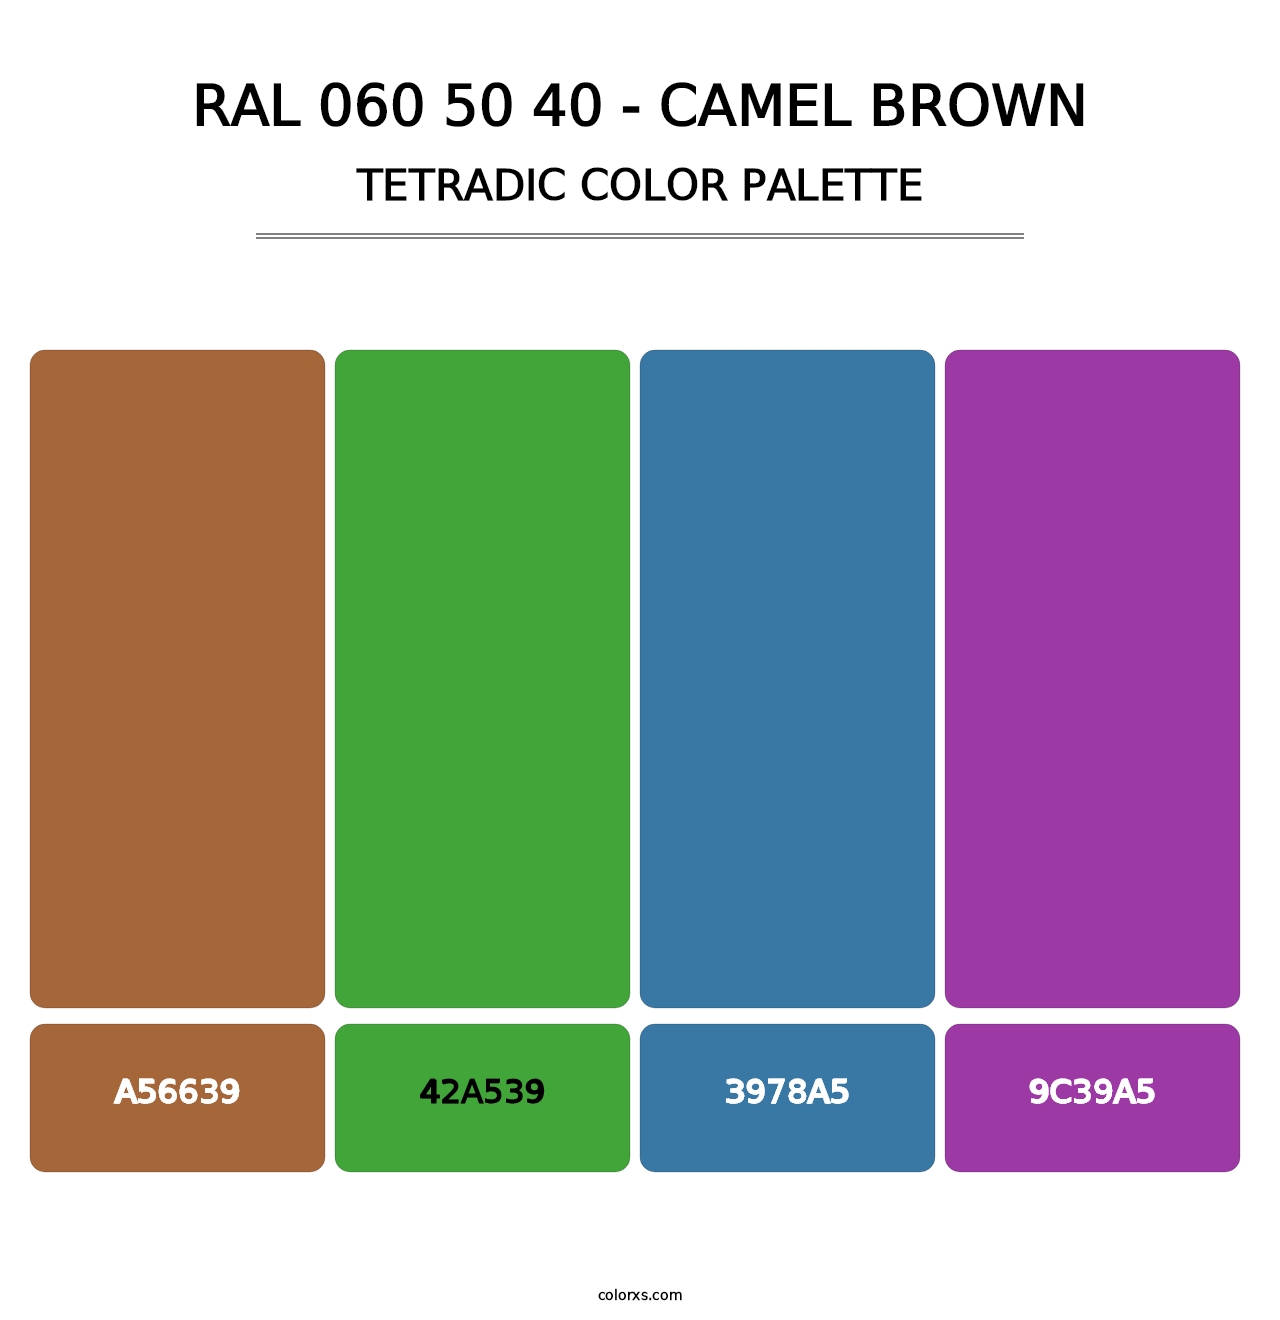 RAL 060 50 40 - Camel Brown - Tetradic Color Palette